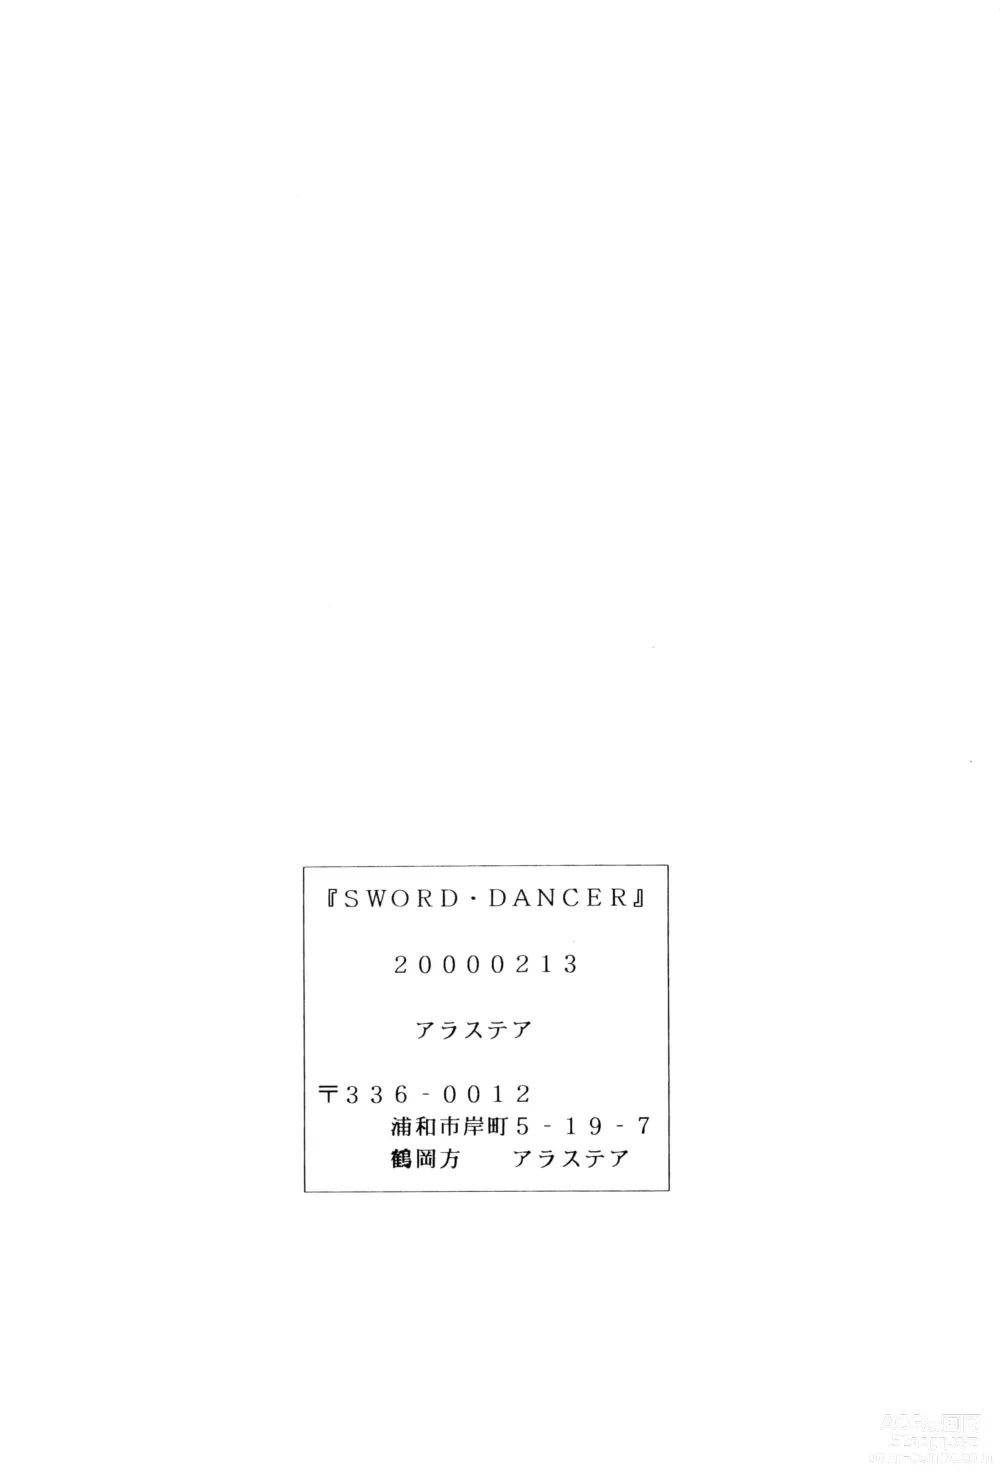 Page 89 of doujinshi SWORD DANCER